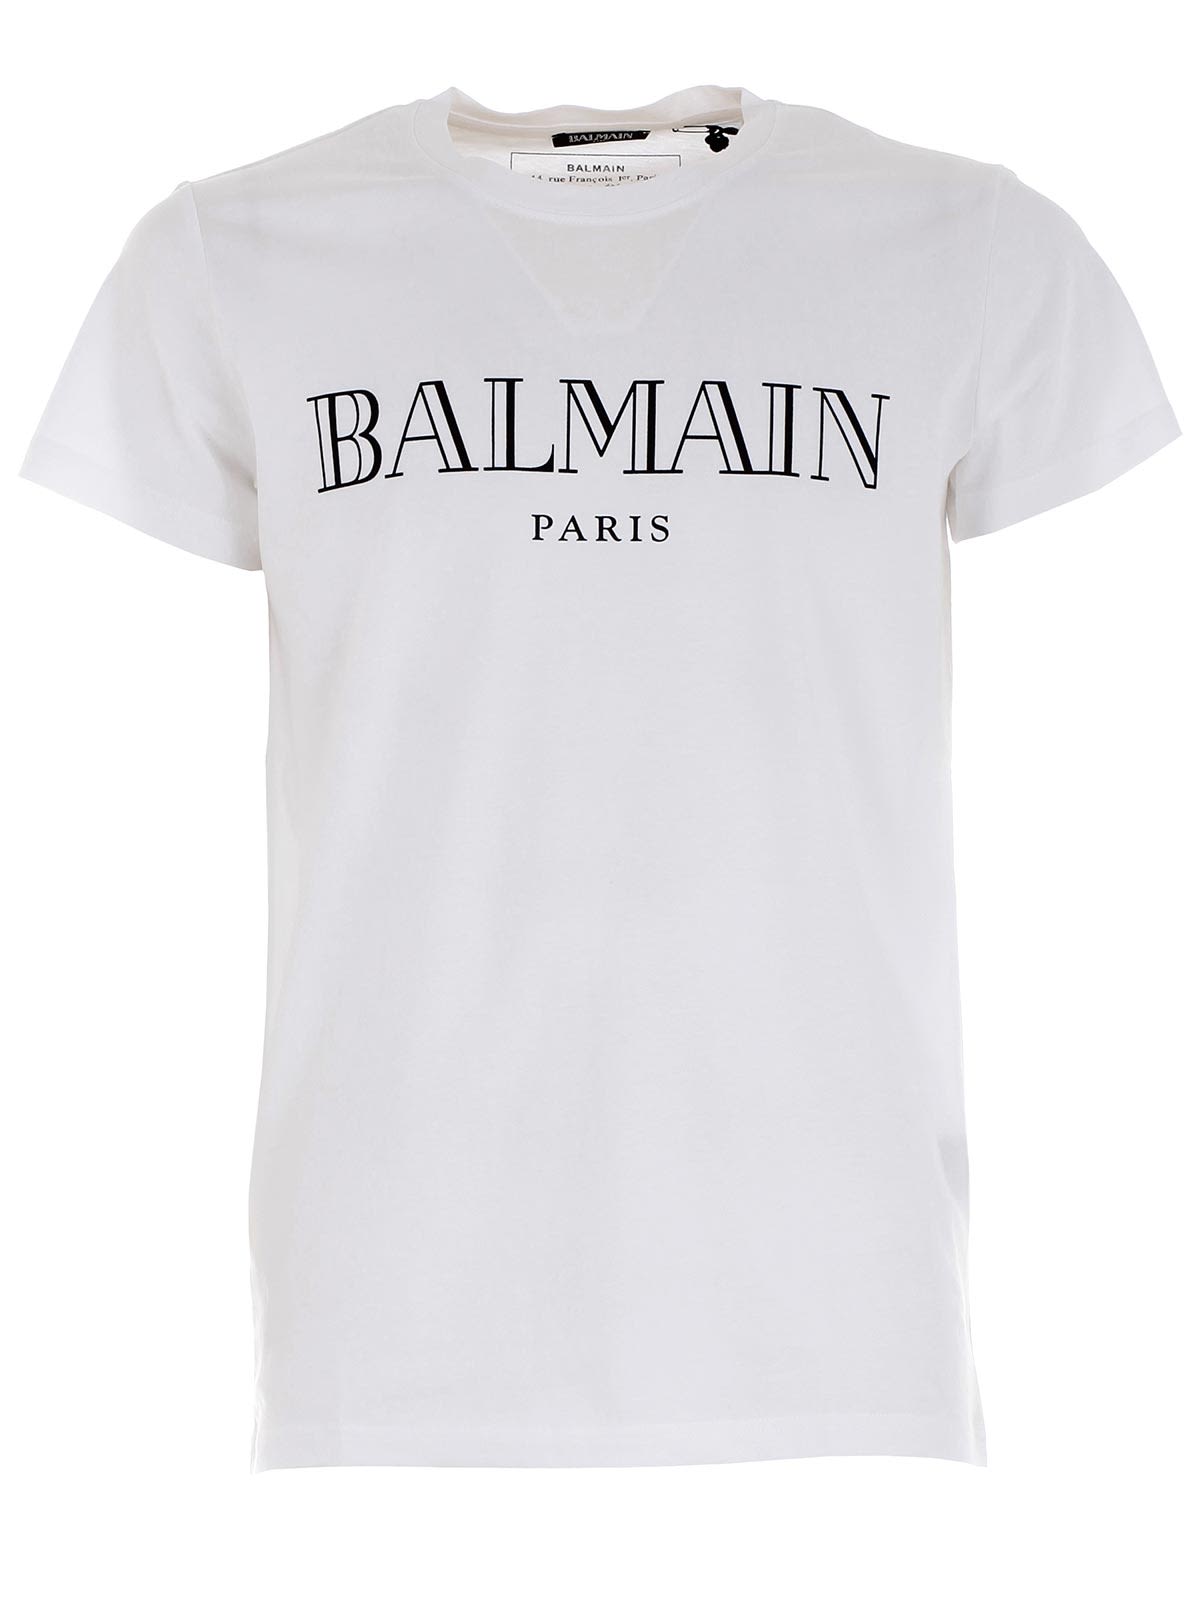 BALMAIN Logo Printed Cotton Jersey T-Shirt, White/Black | ModeSens